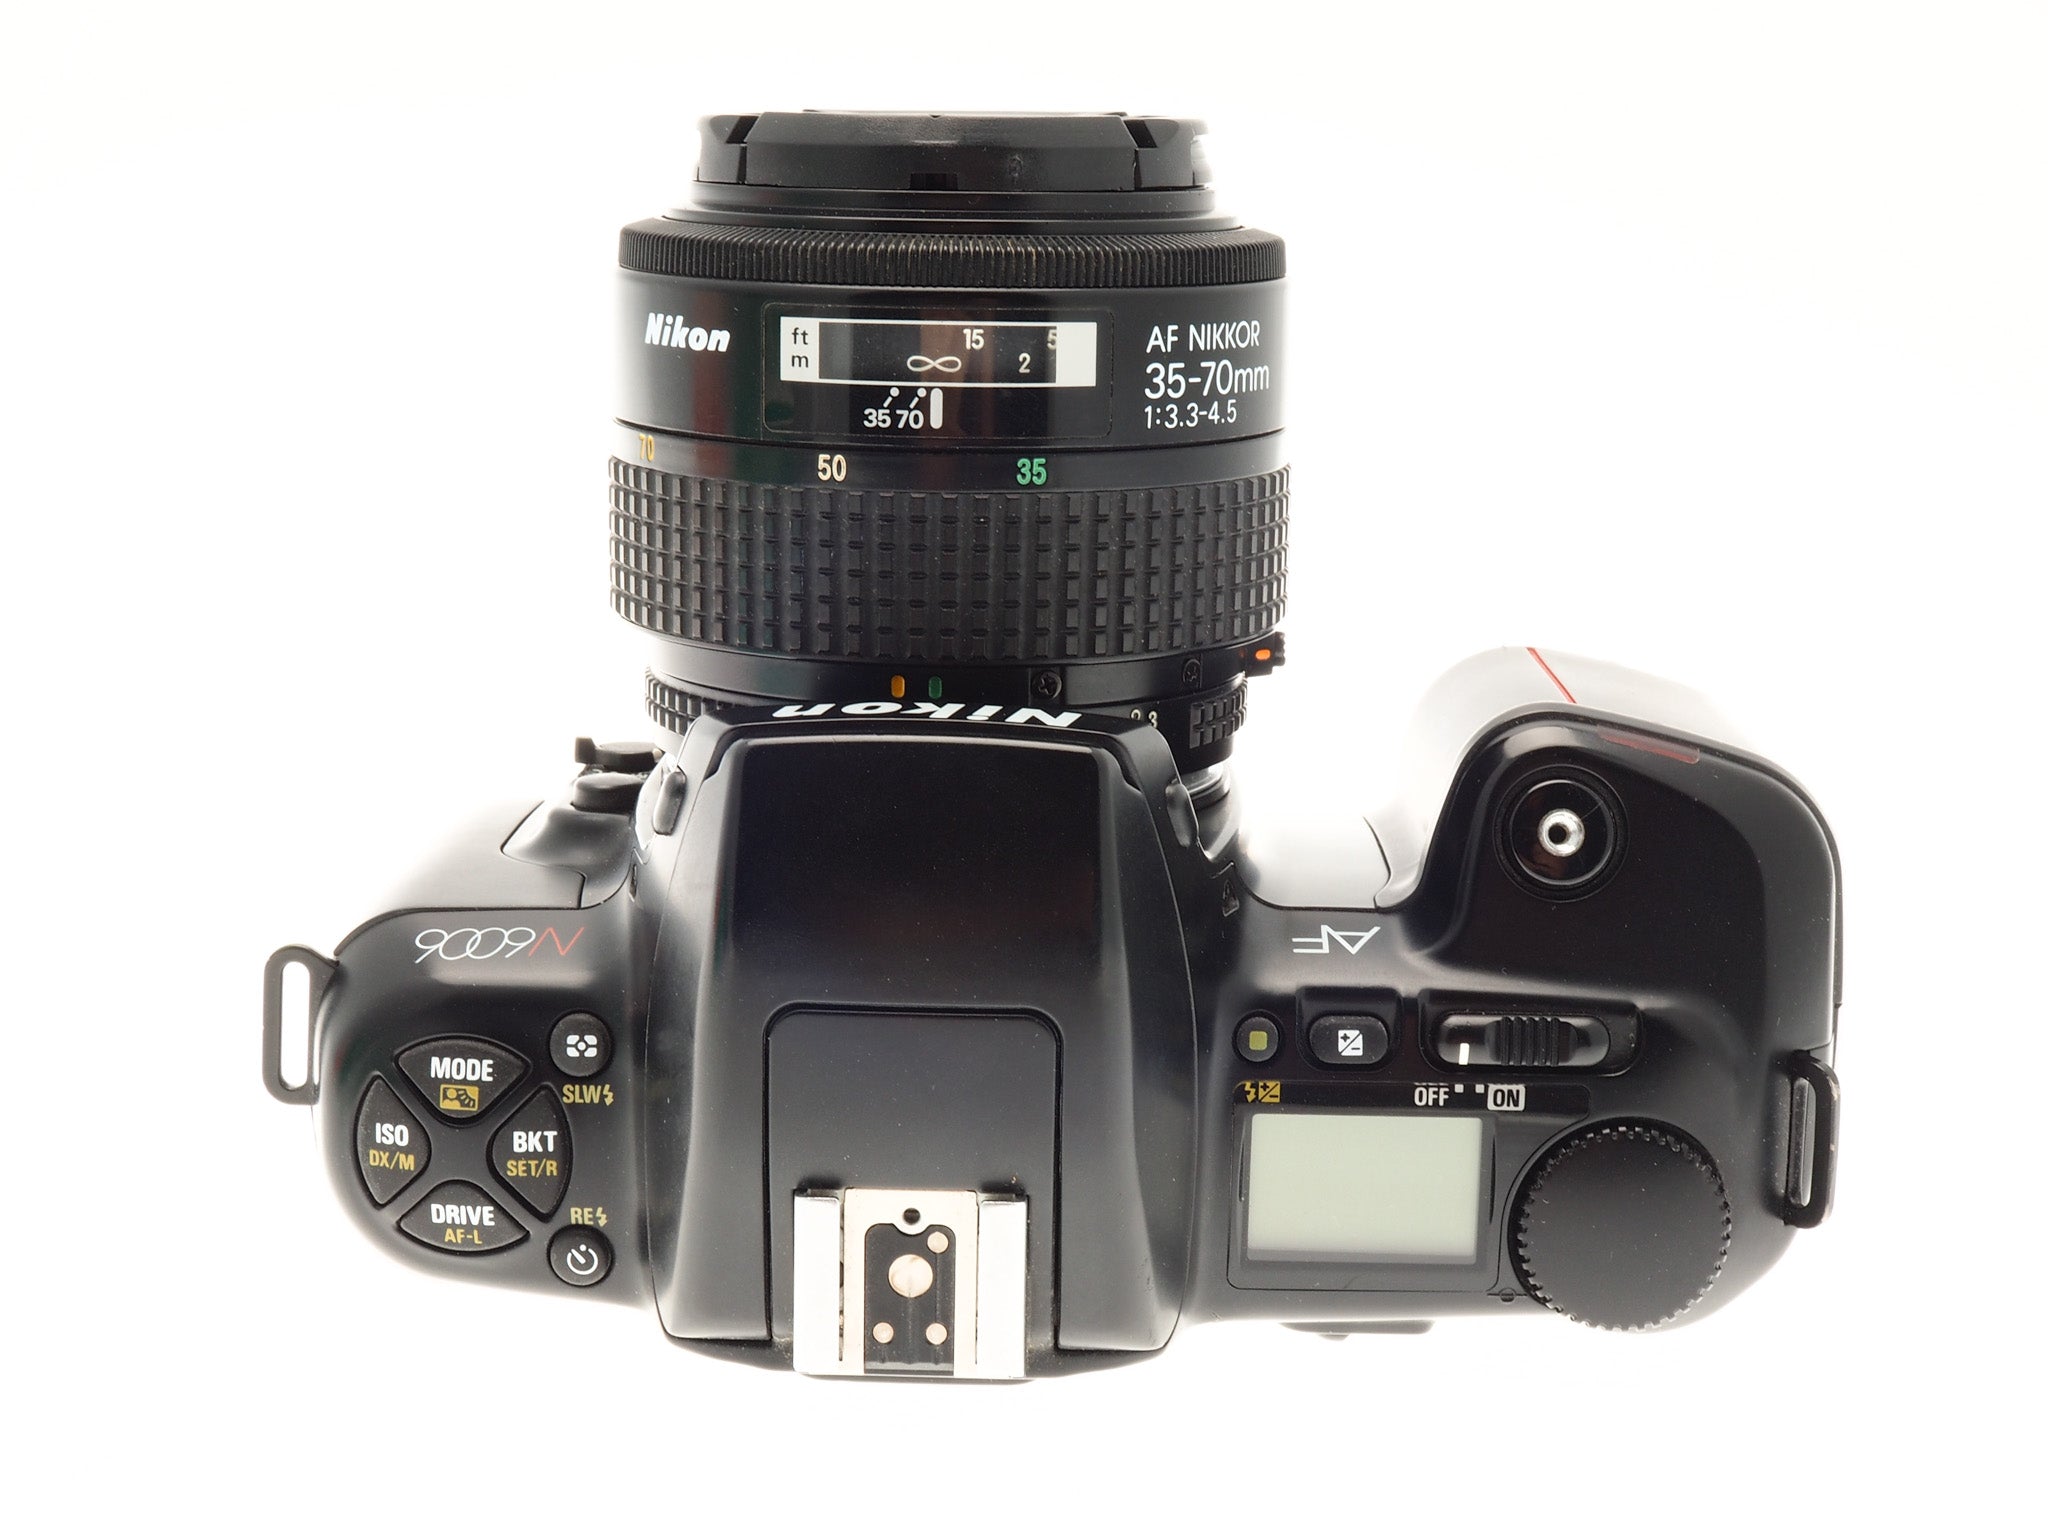 Nikon N6006 - 35mm Film Camera Body - with 6 month warranty